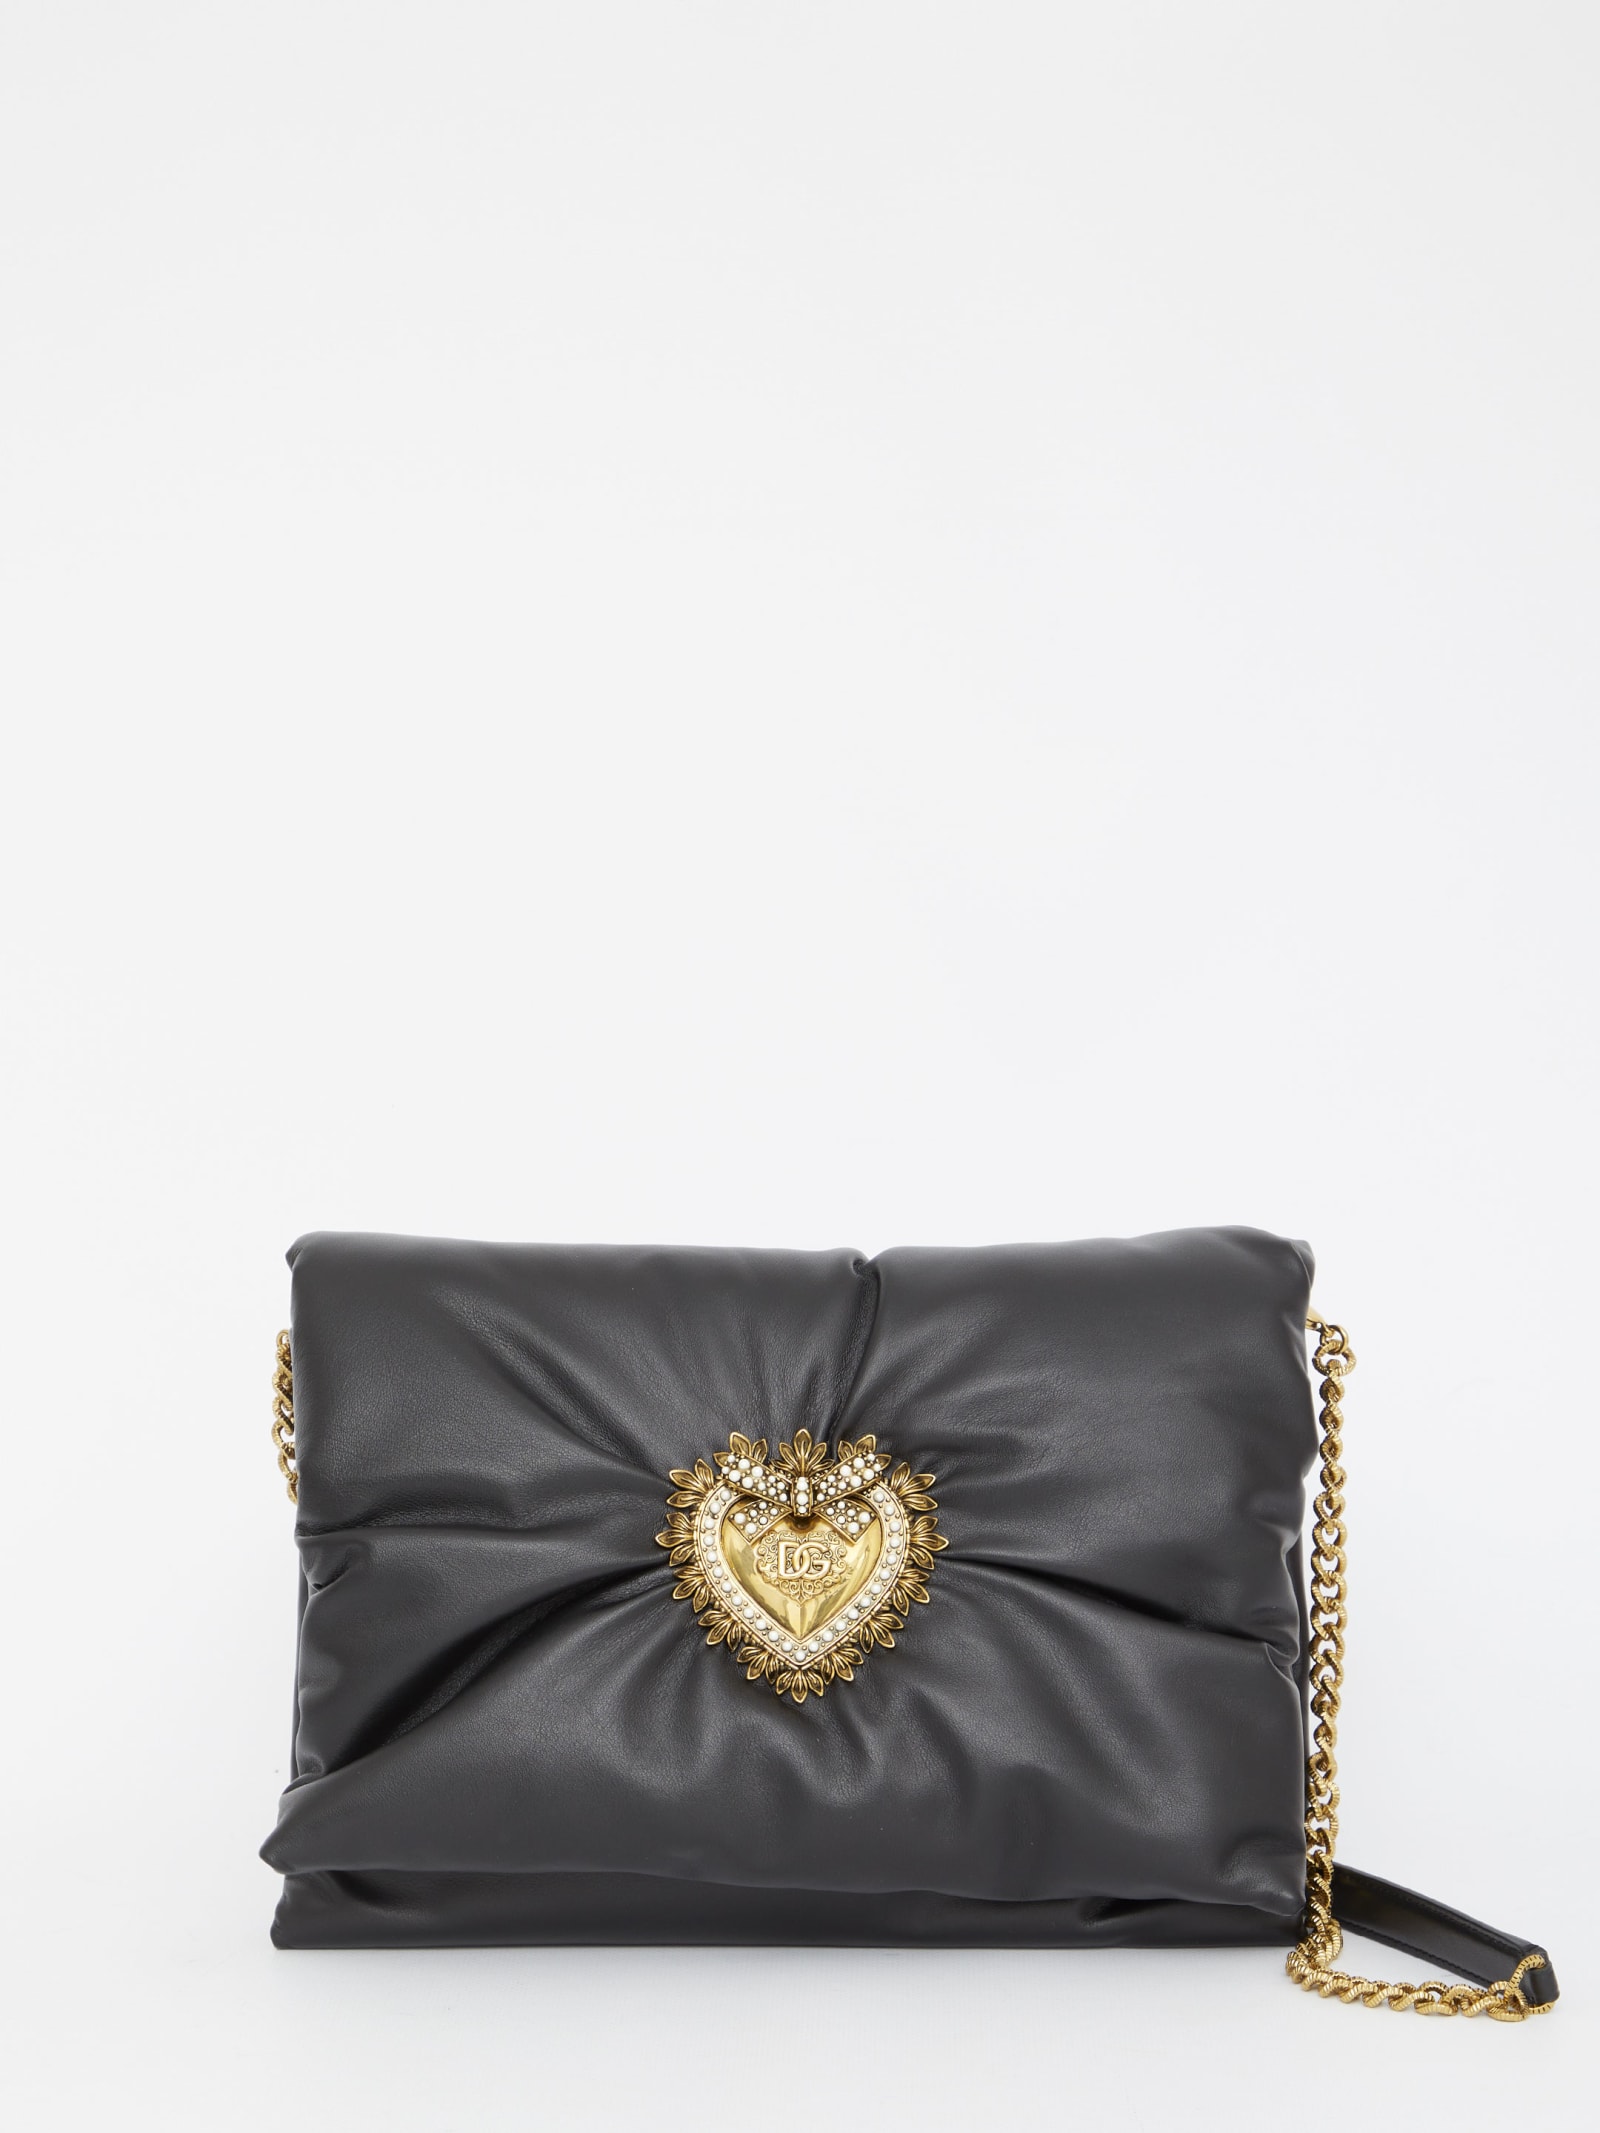 Dolce & Gabbana Devotion Soft Medium Bag